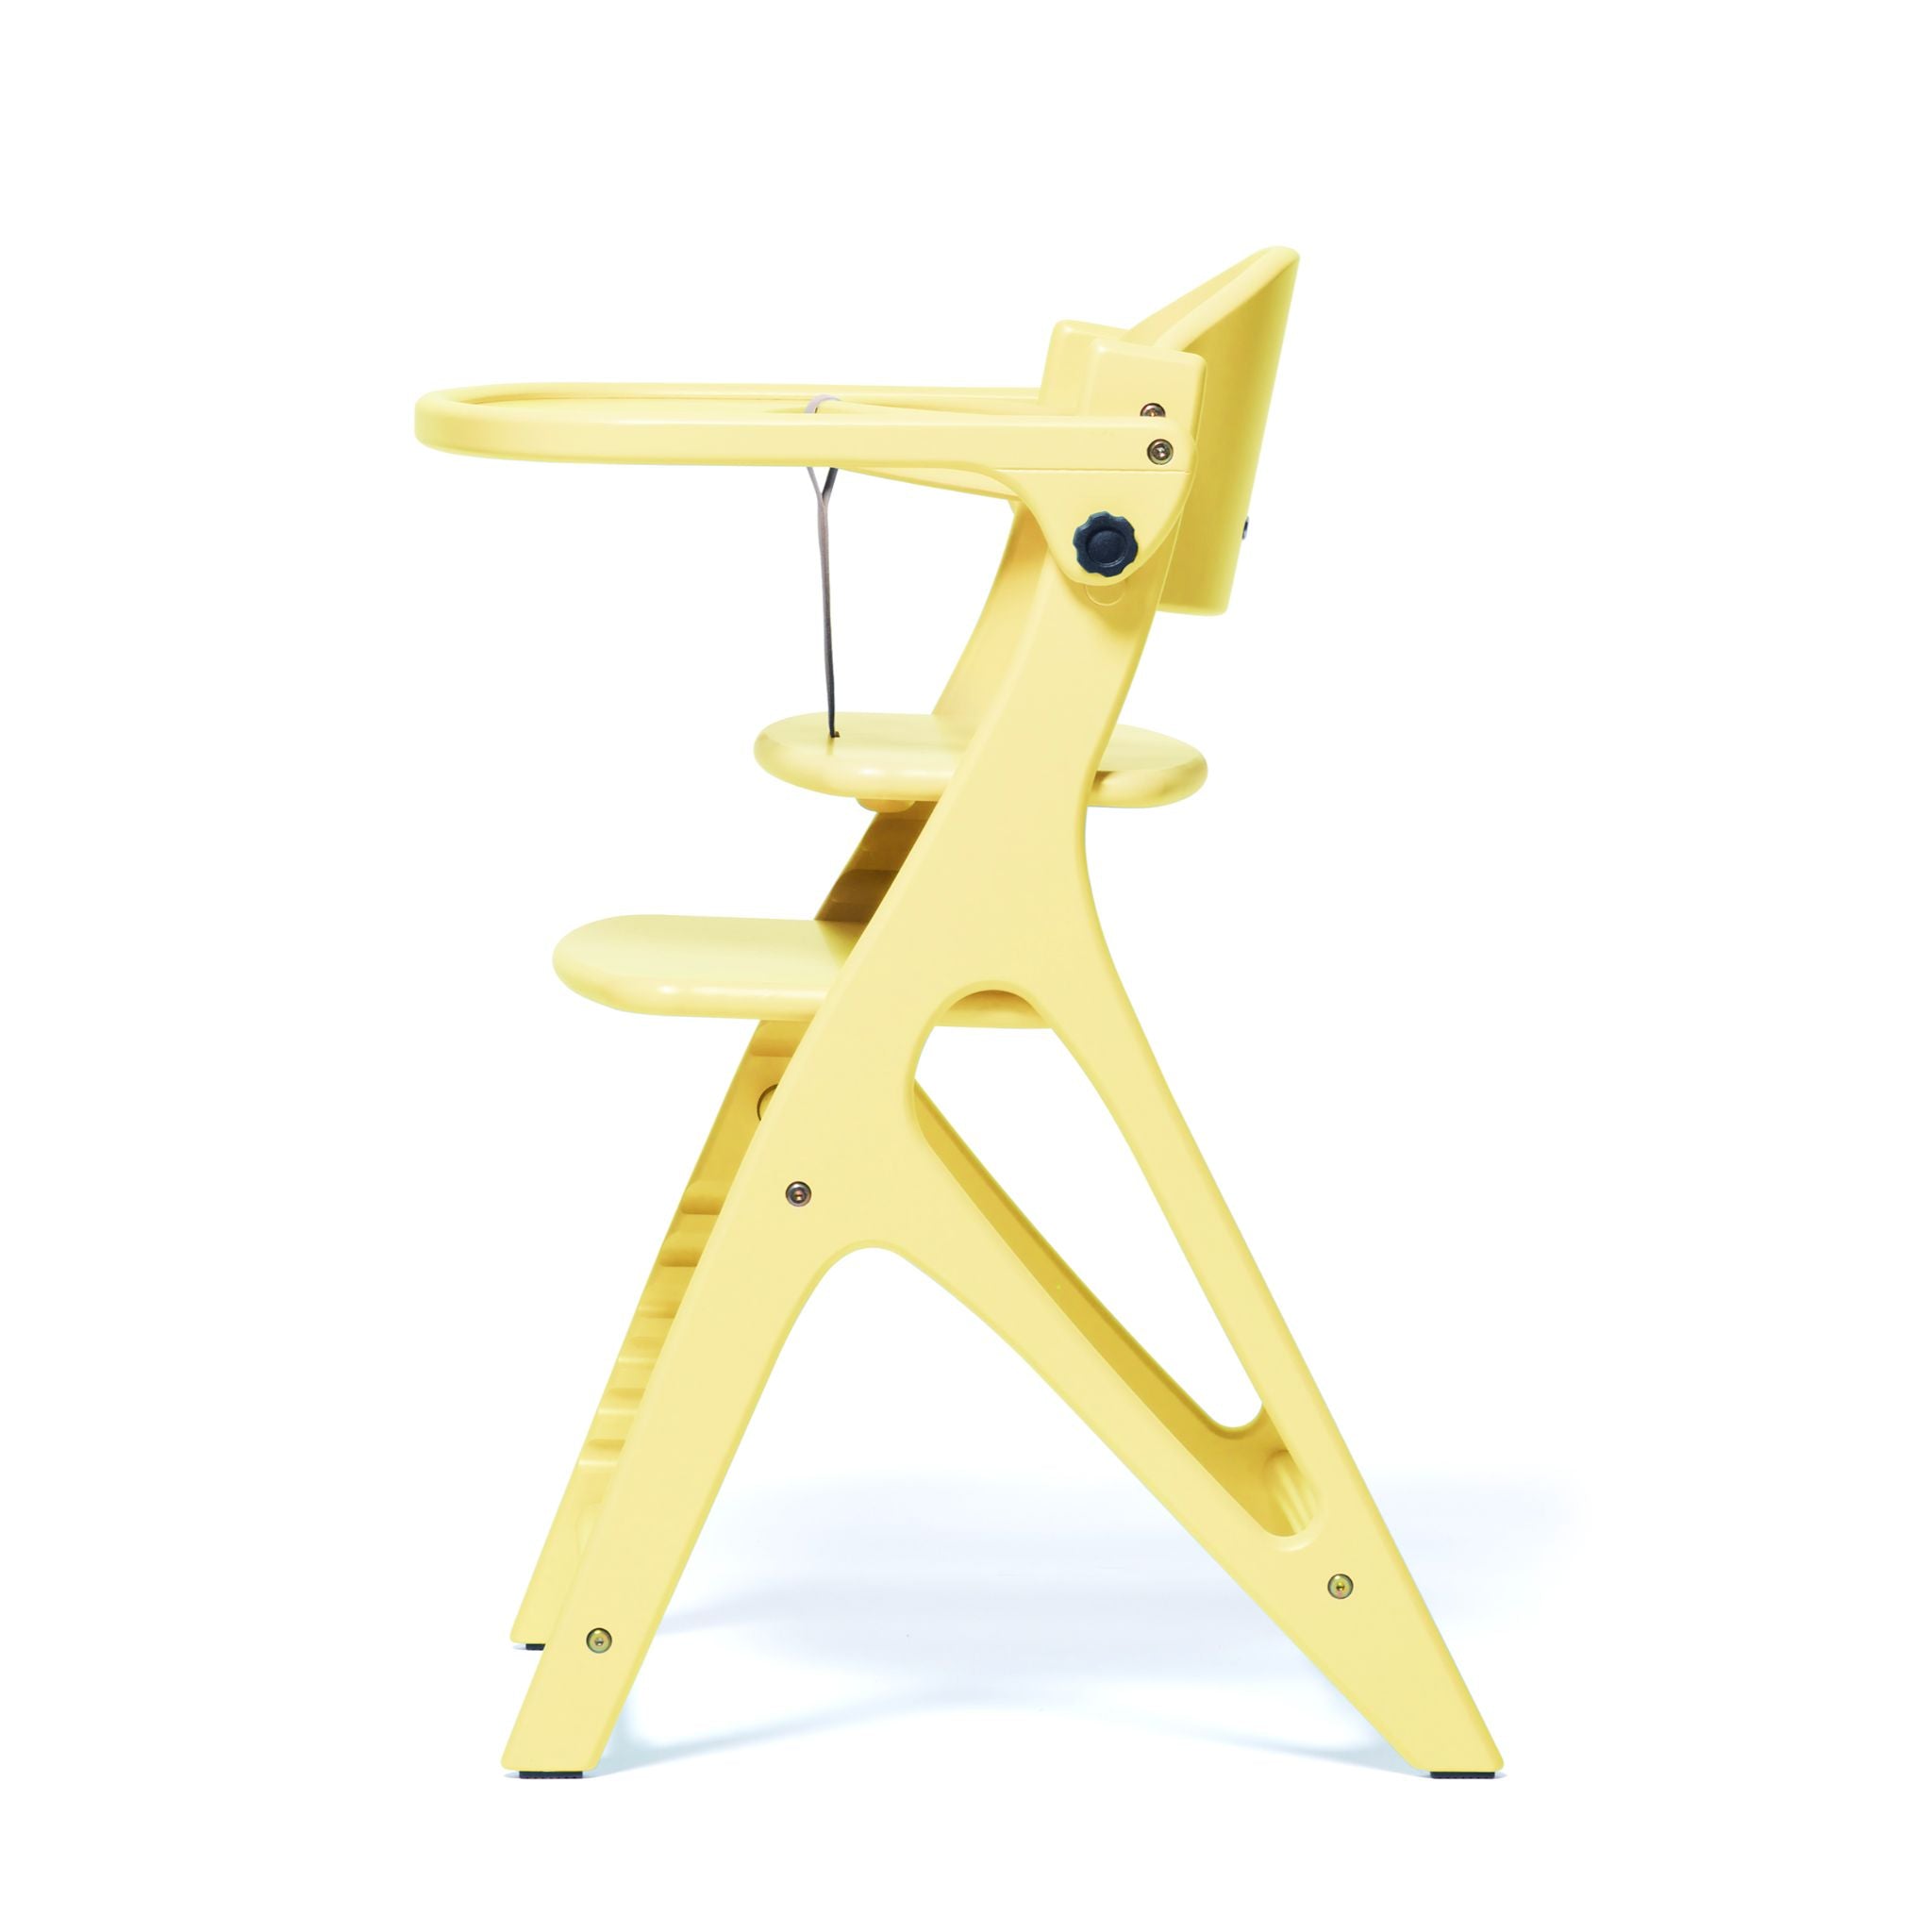 Affel High Chair - Creamy Yellow